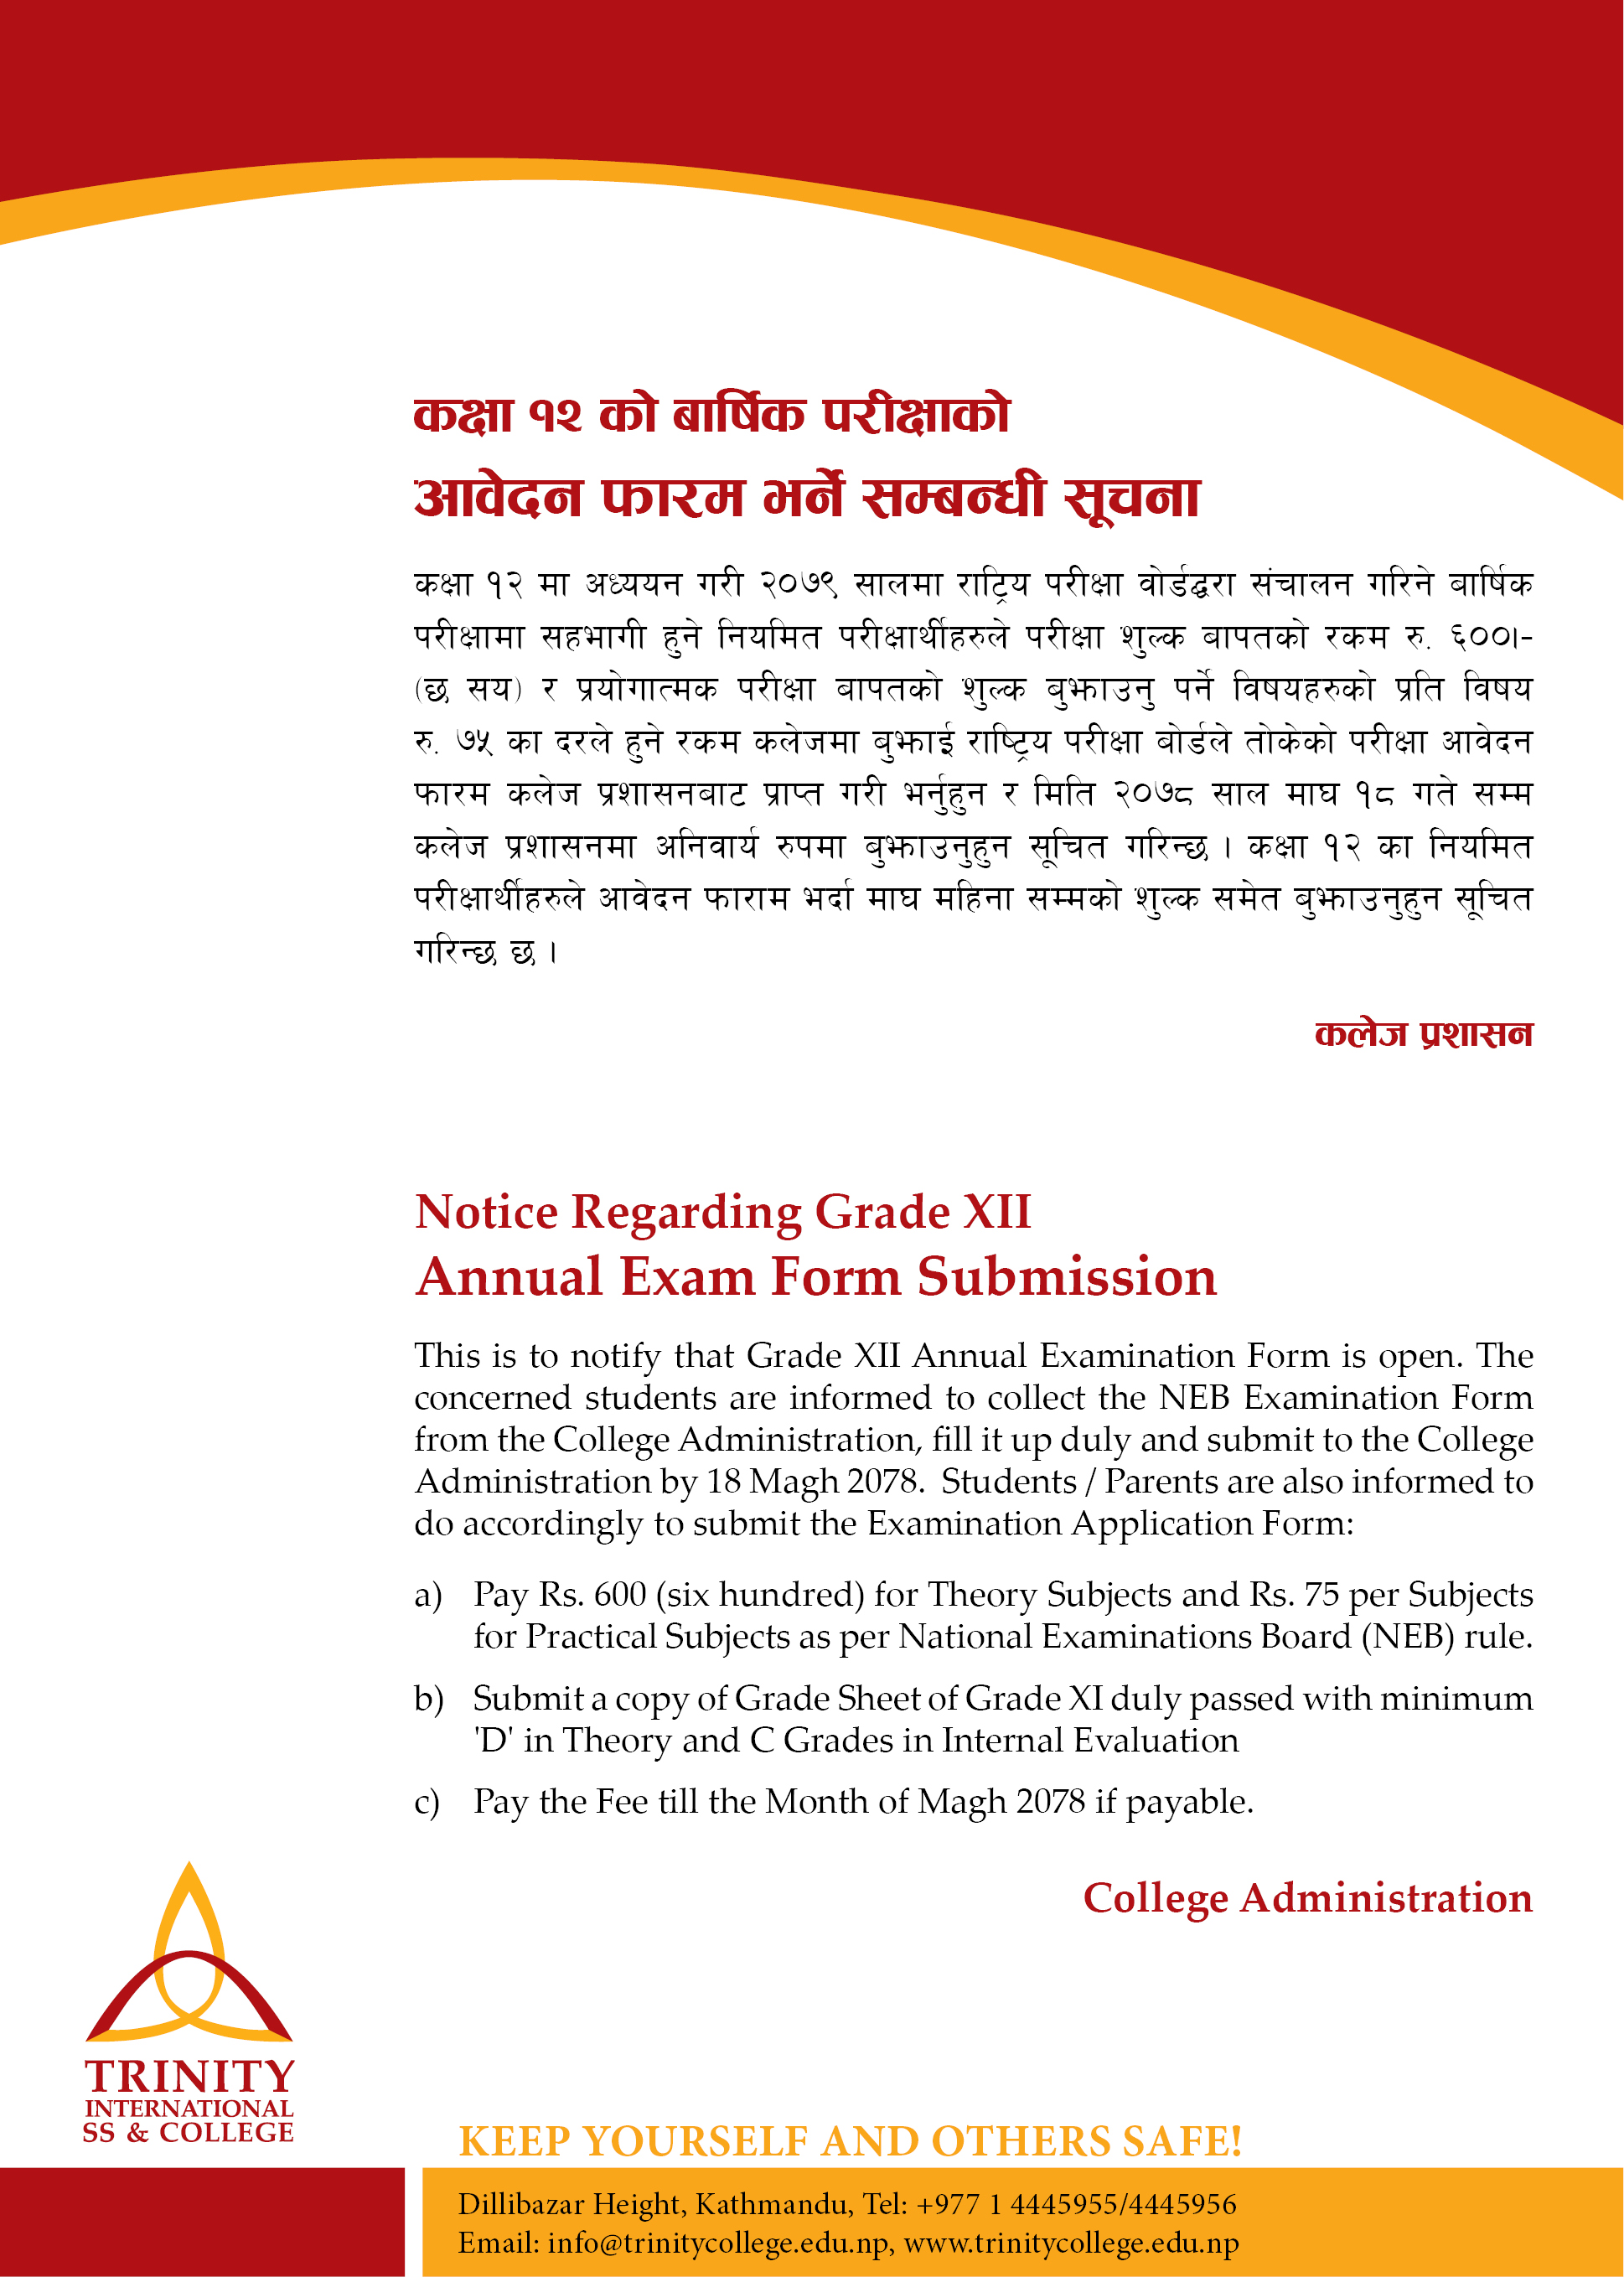 NEB Grade XII Annual Exam Form Notice